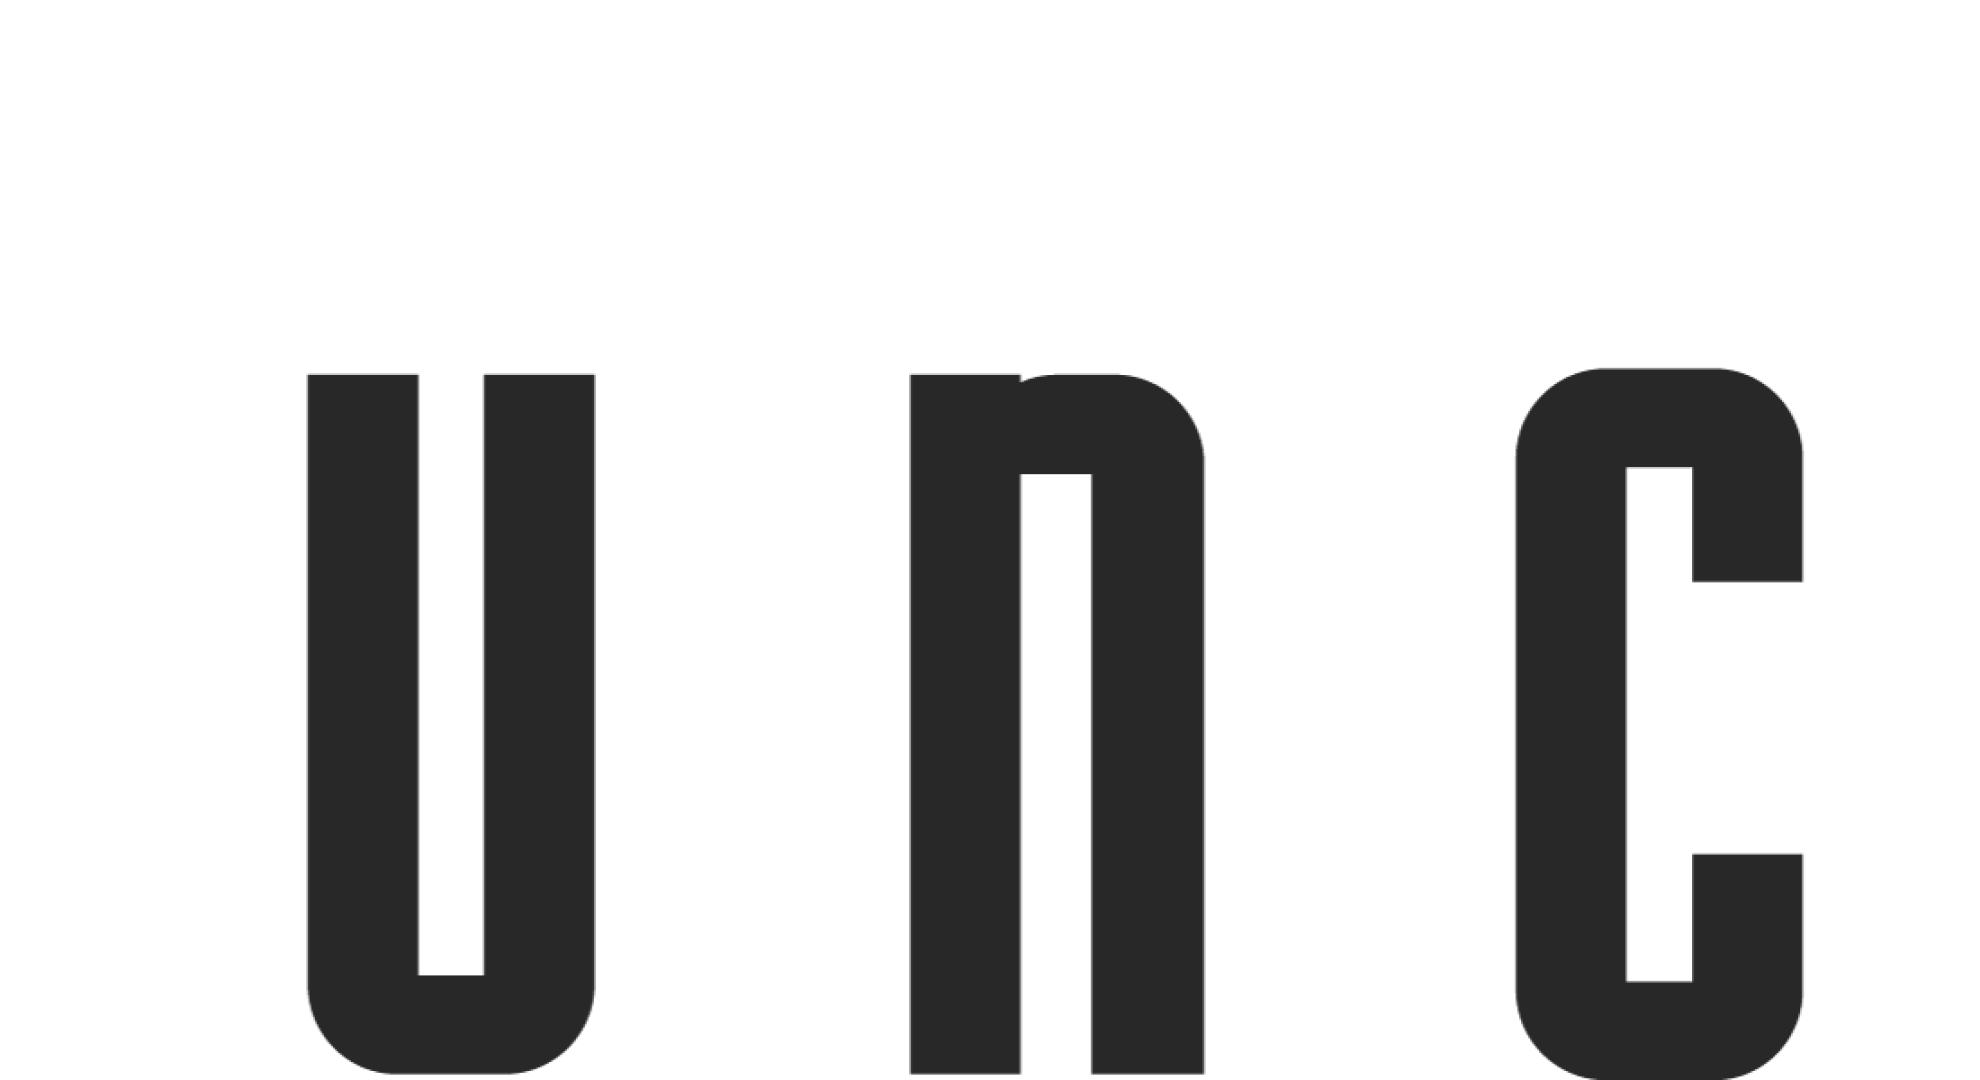 LAUNCH Logo